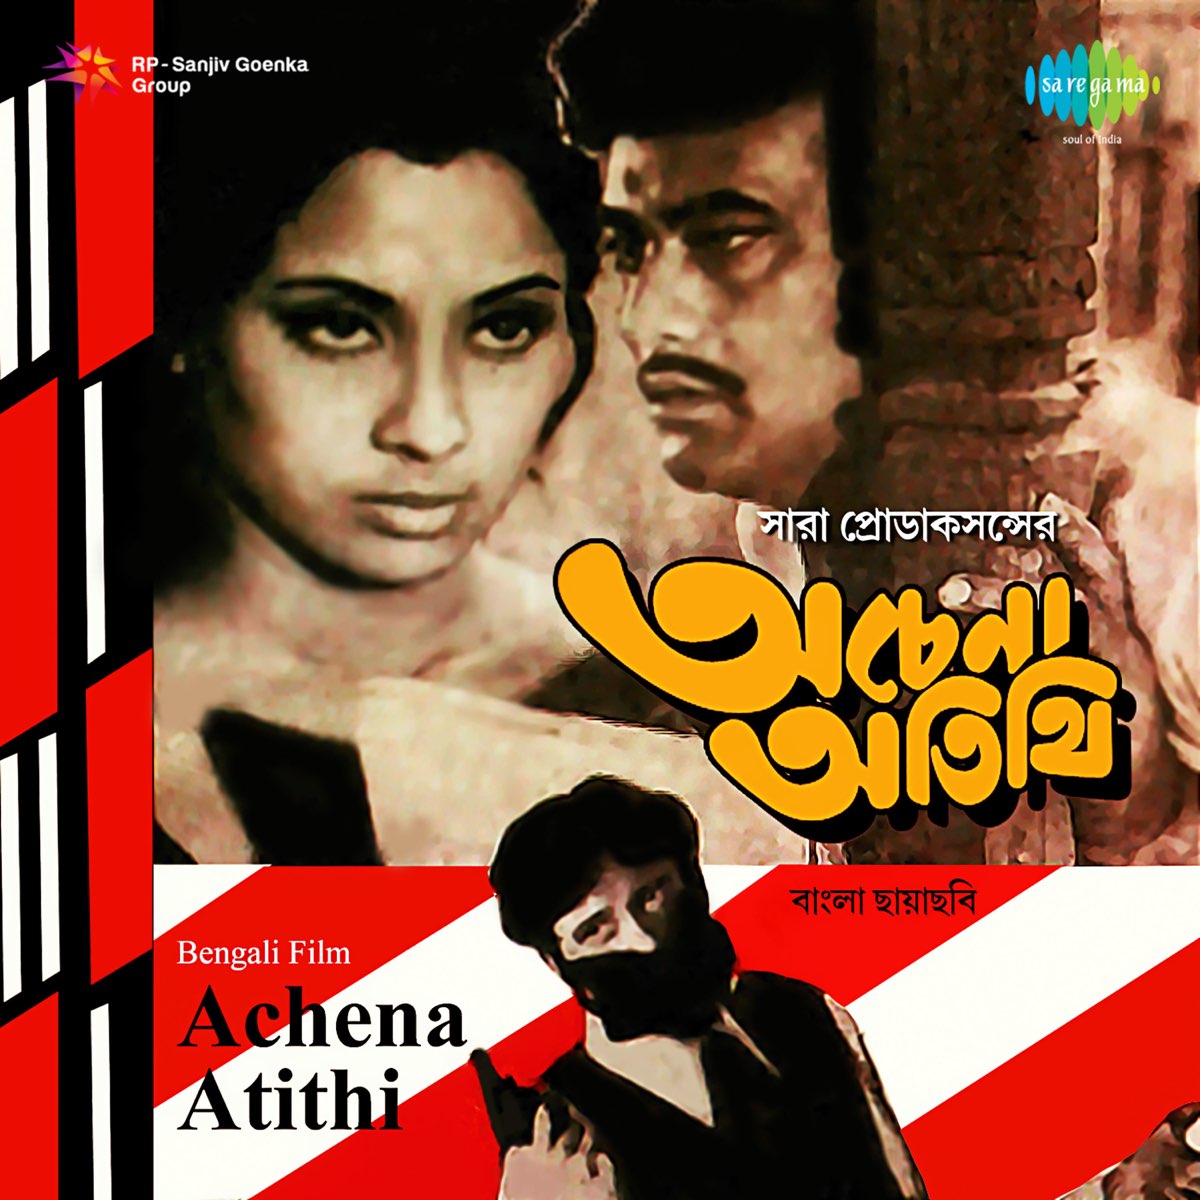 Bangla movie achena atithi